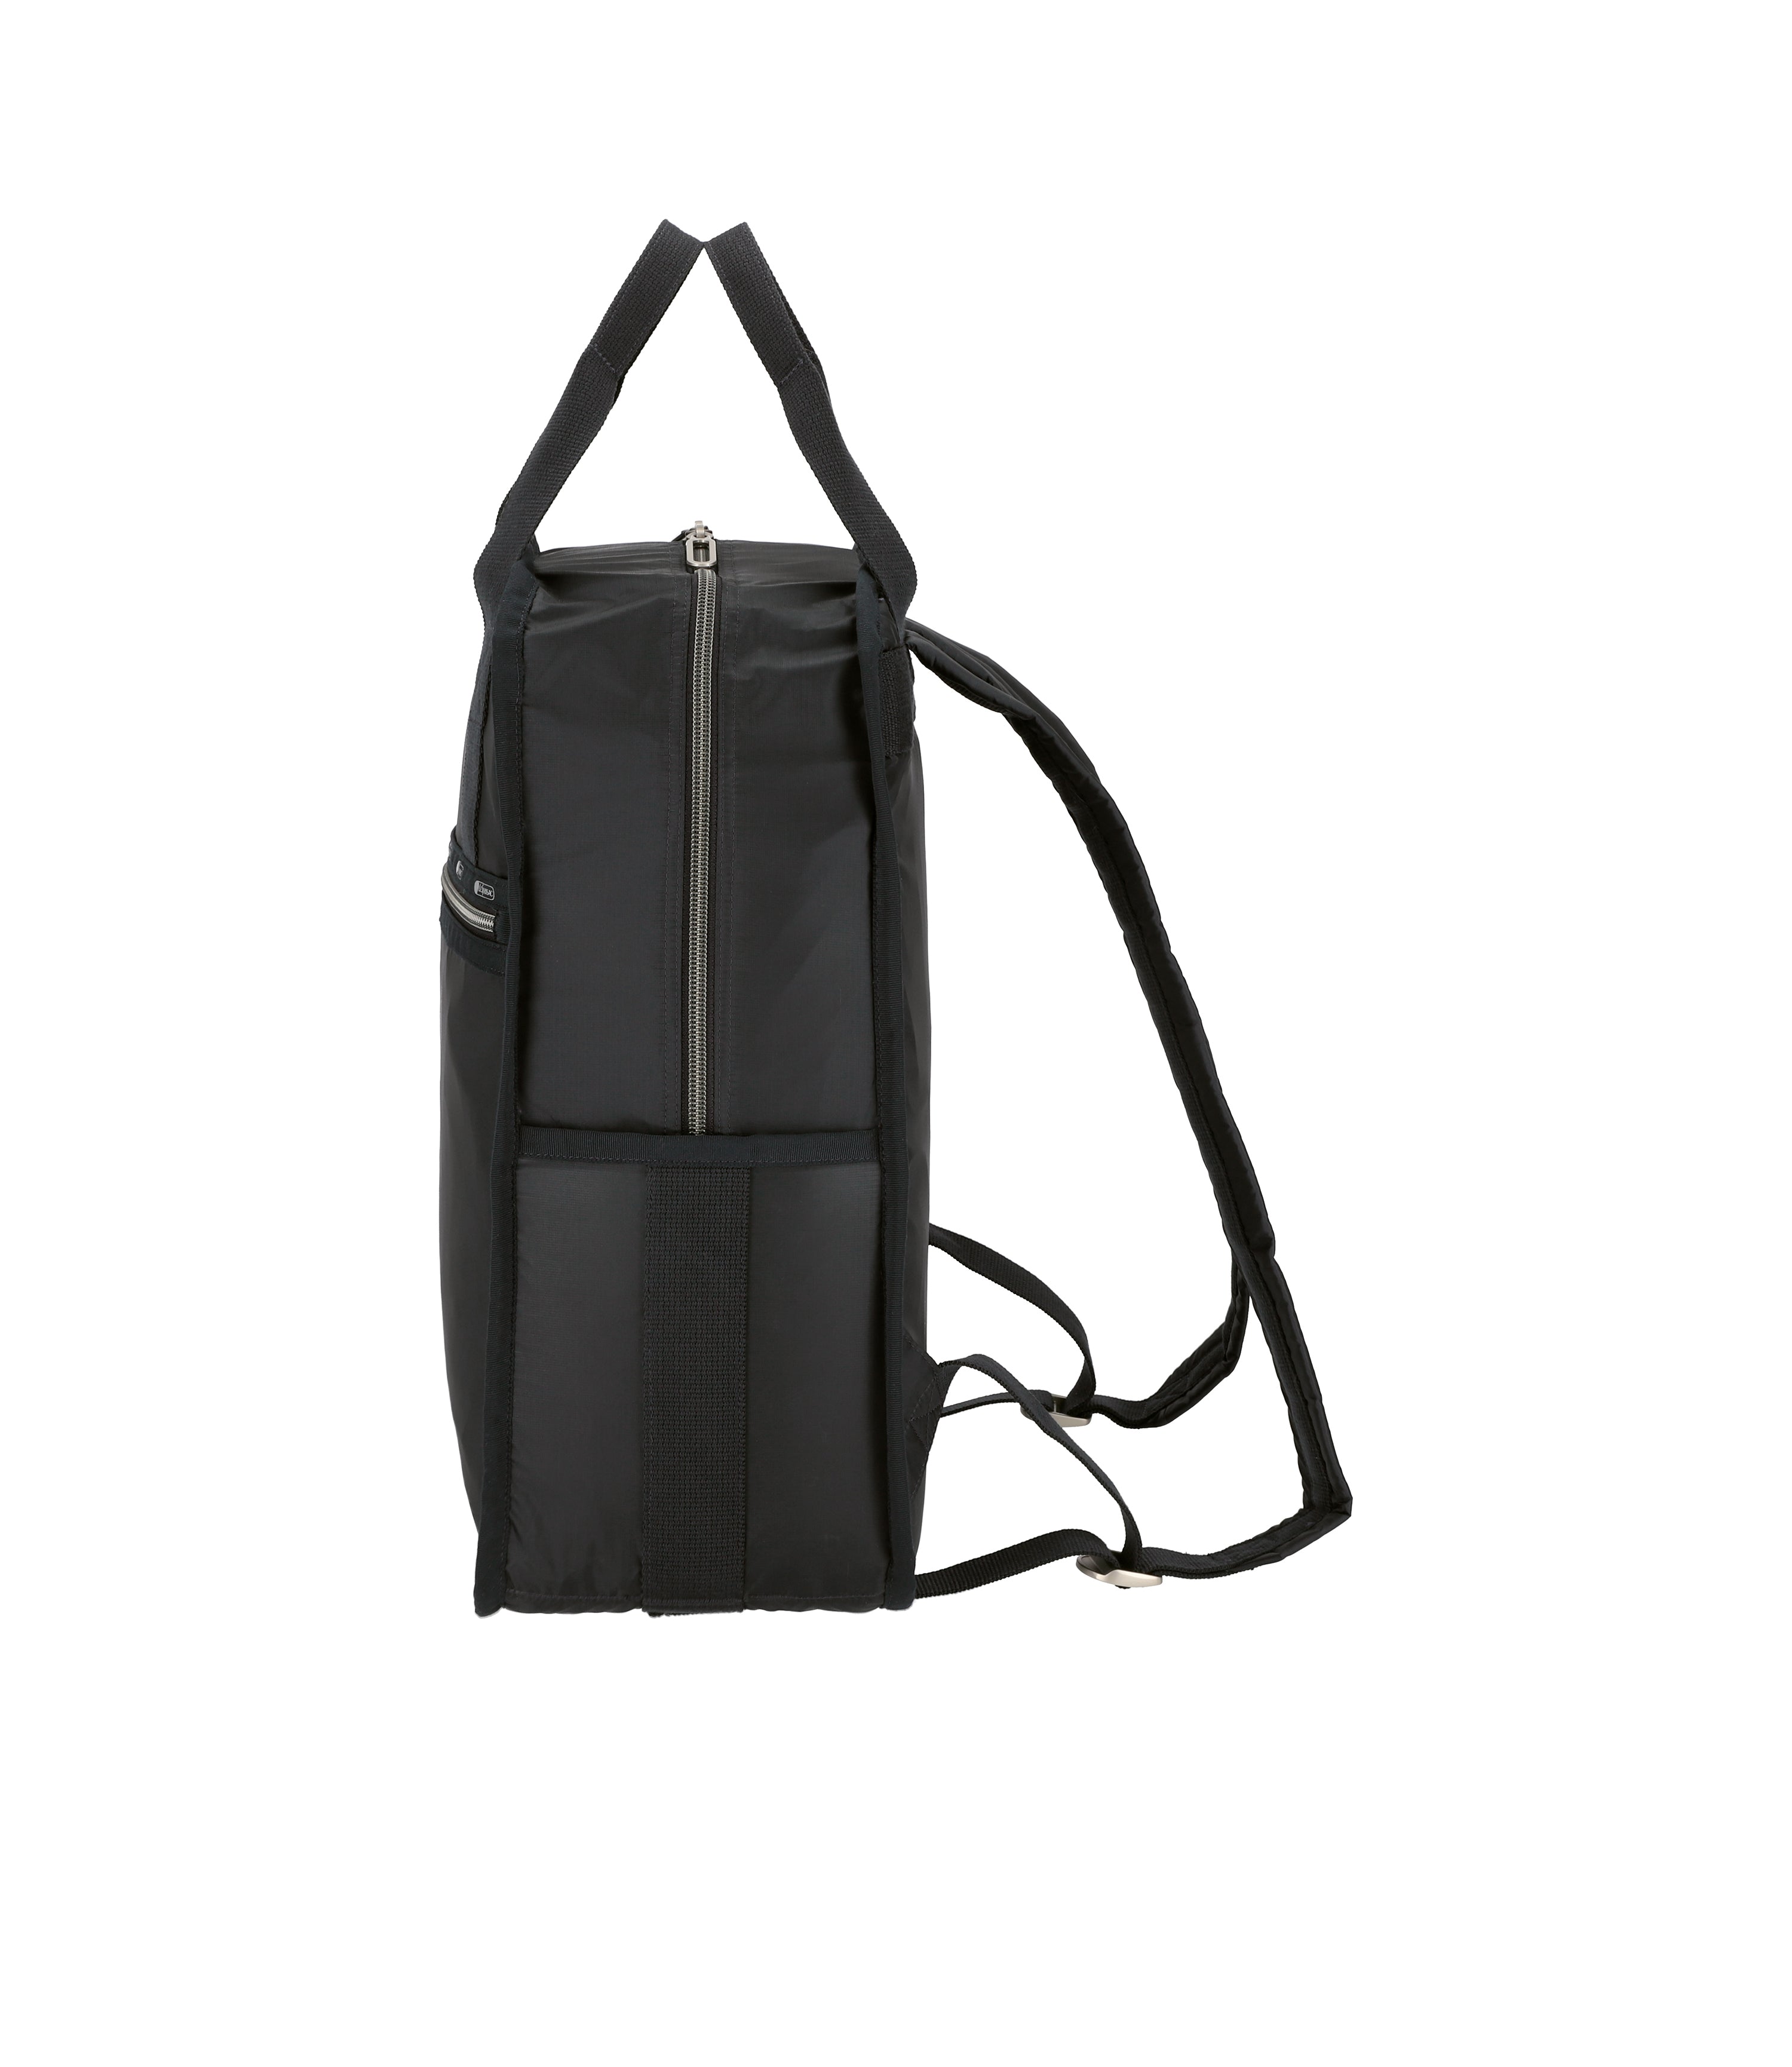 Lesportsac Route Small Backpack - Monogram Jacquard Black